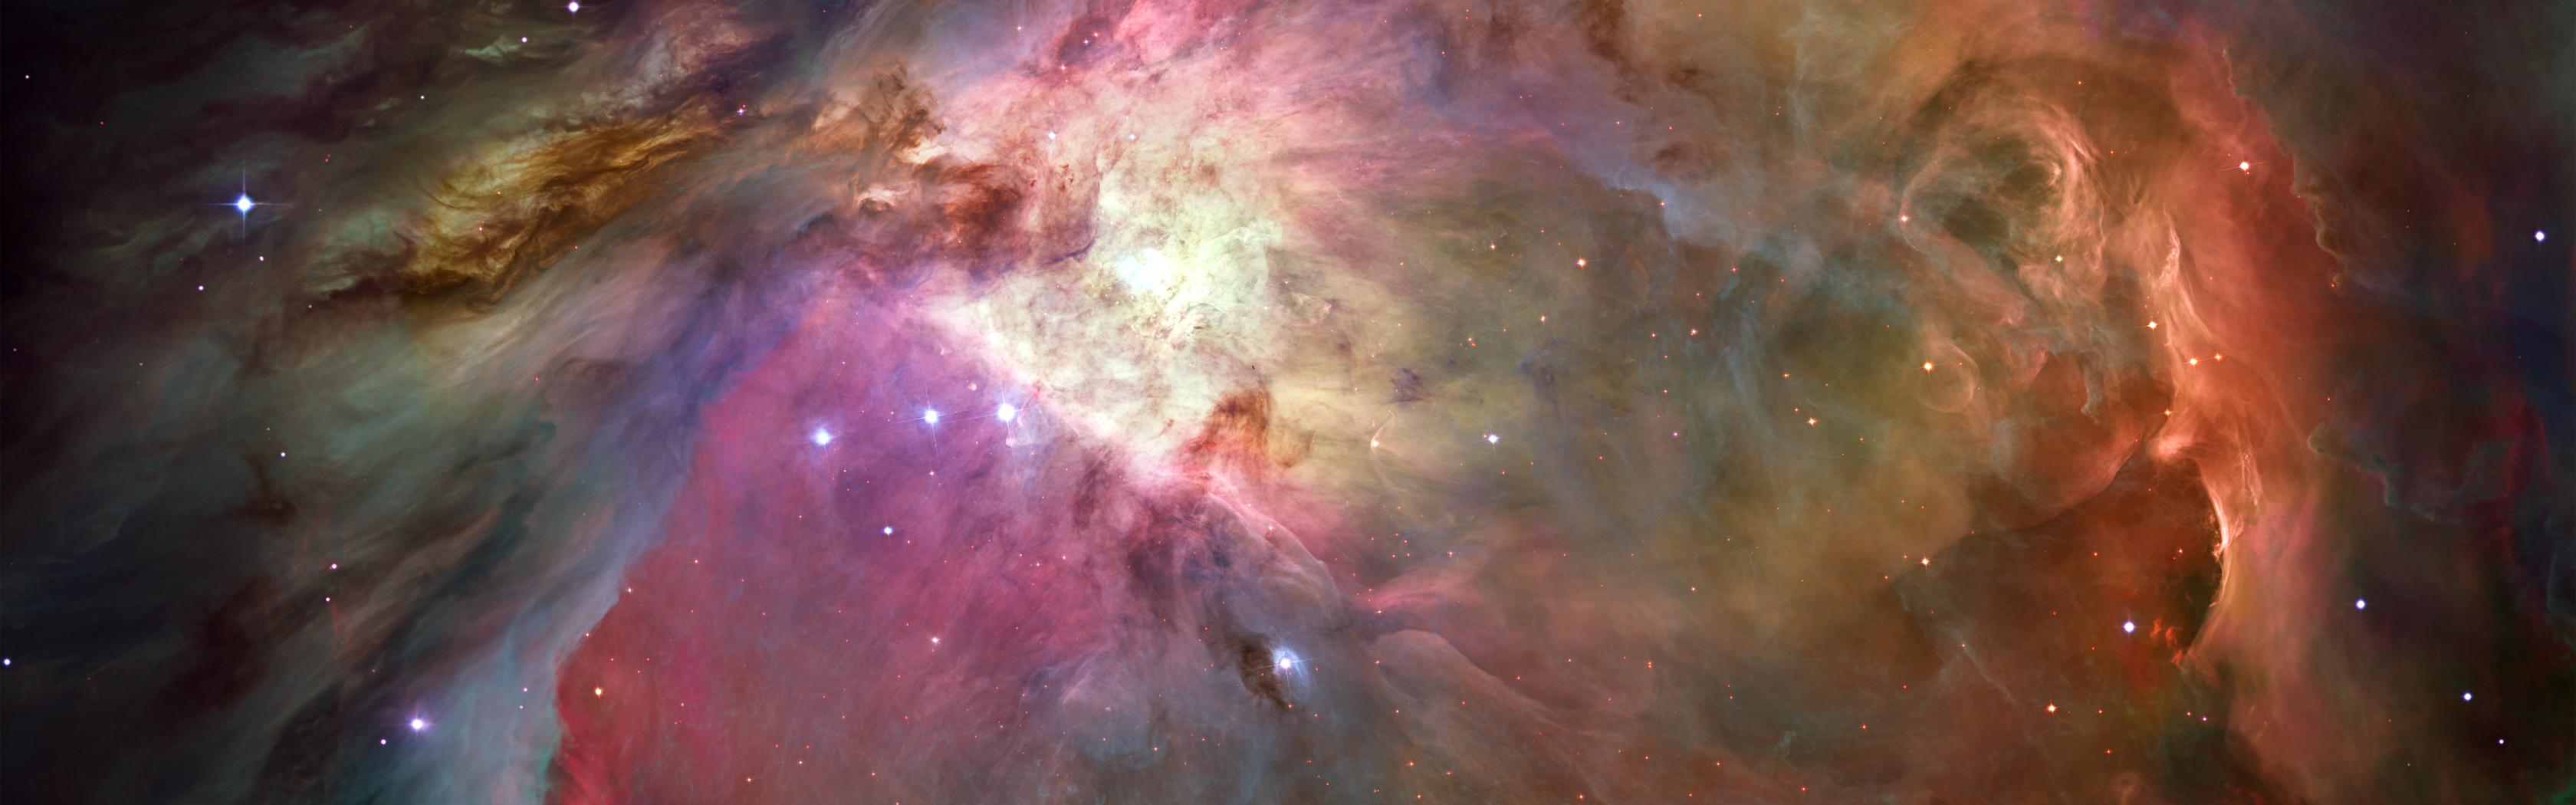 nebula, space, sci fi, orion nebula